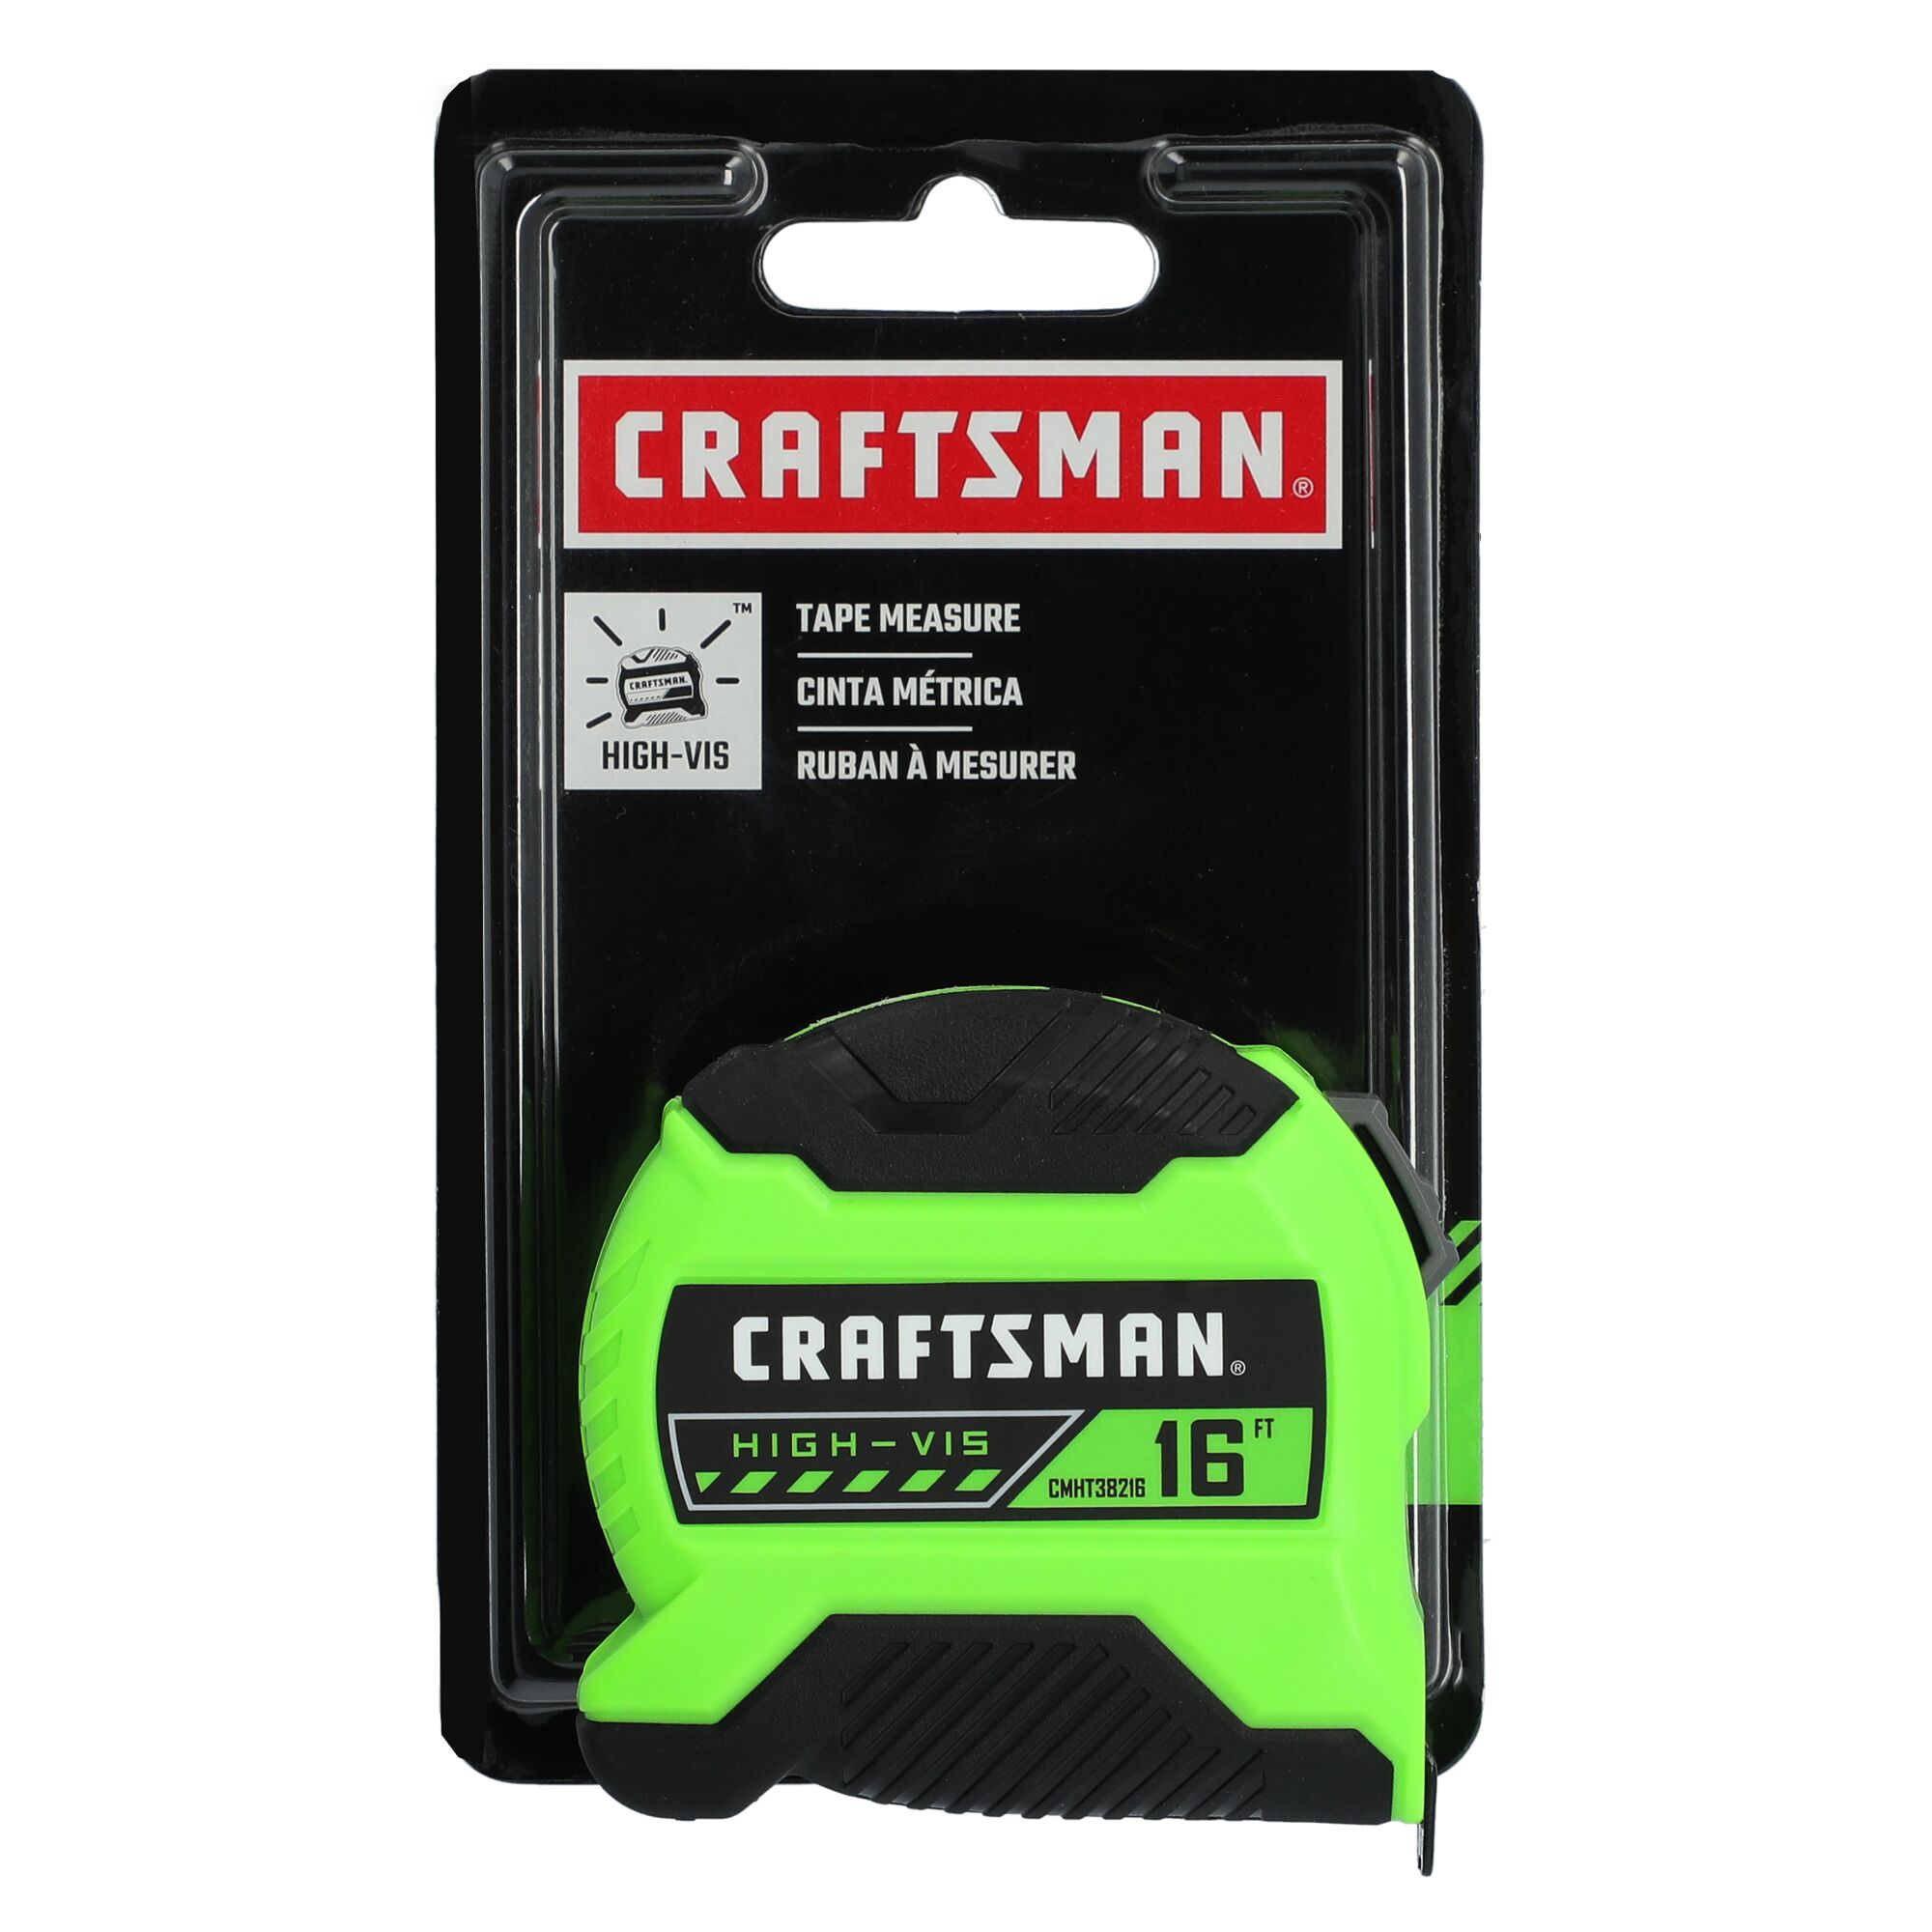 CRAFTSMAN CMHT38216S CRAFTSMAN HIGH VIS 16' TAPE MEASURE packaging view.